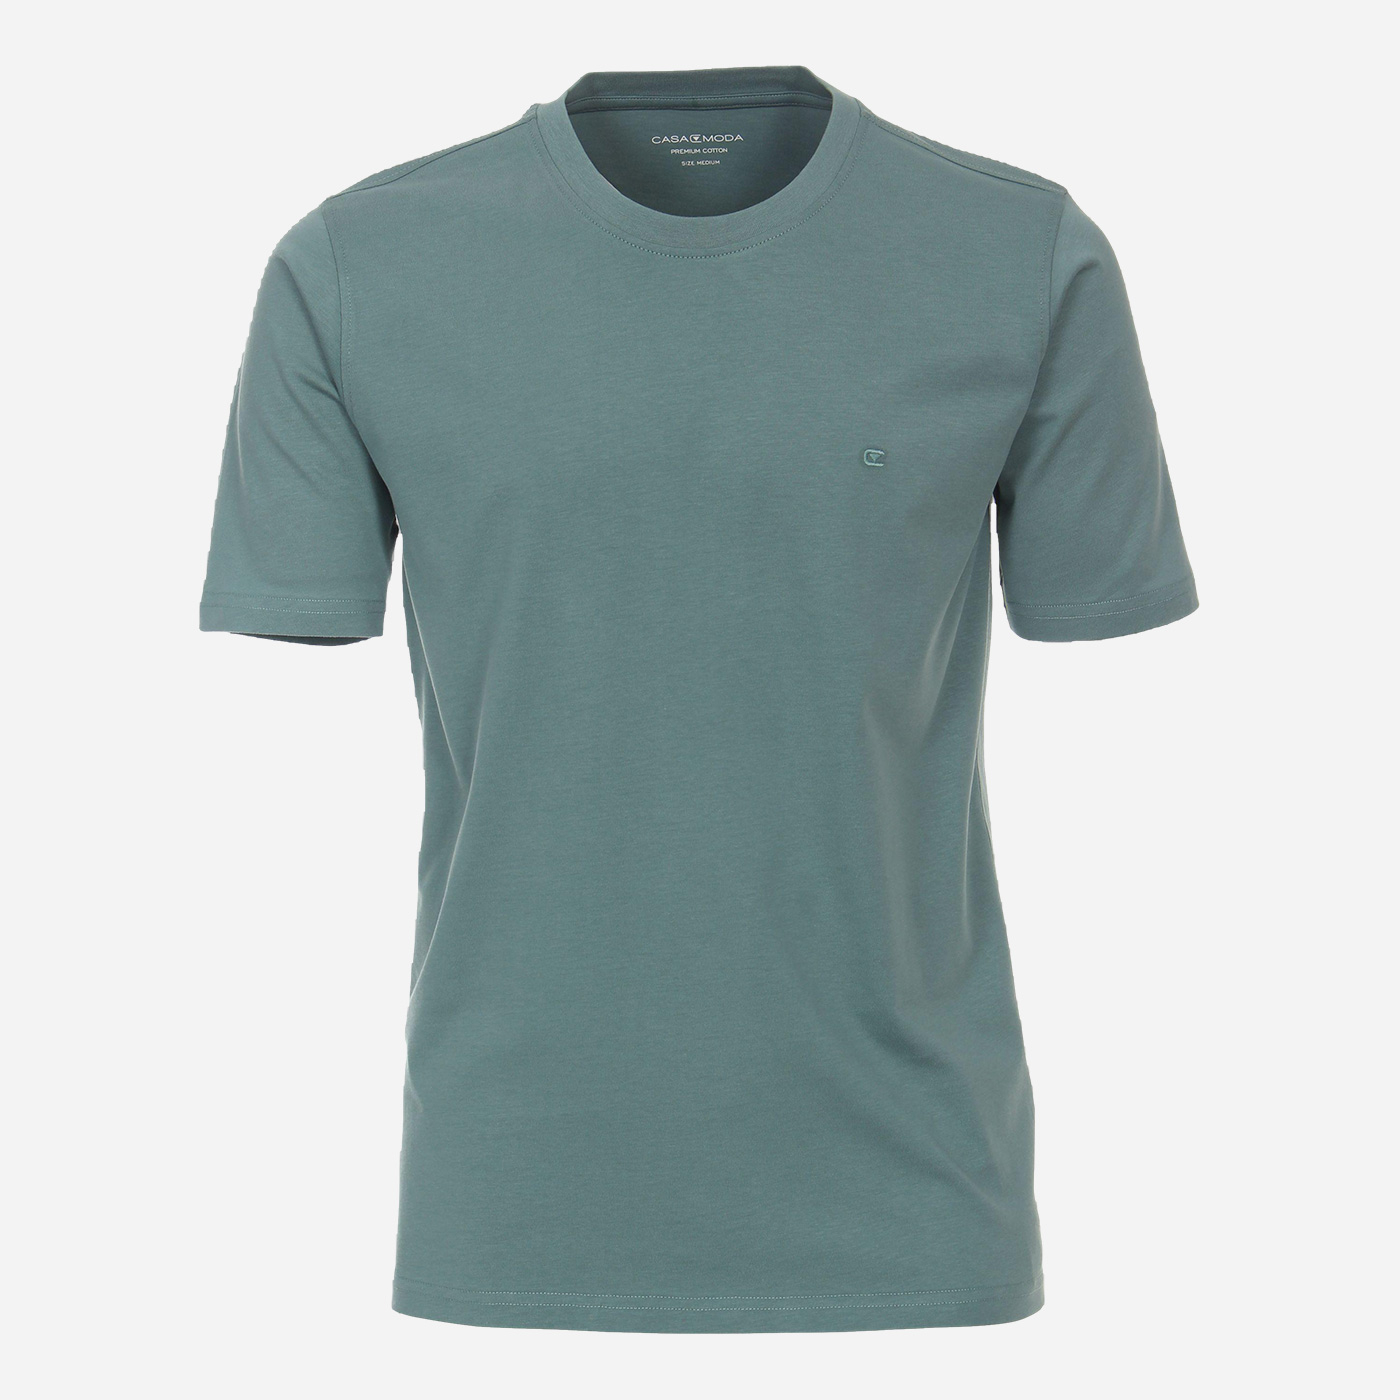 CASAMODA Grünes Baumwoll-T-Shirt Größe: S